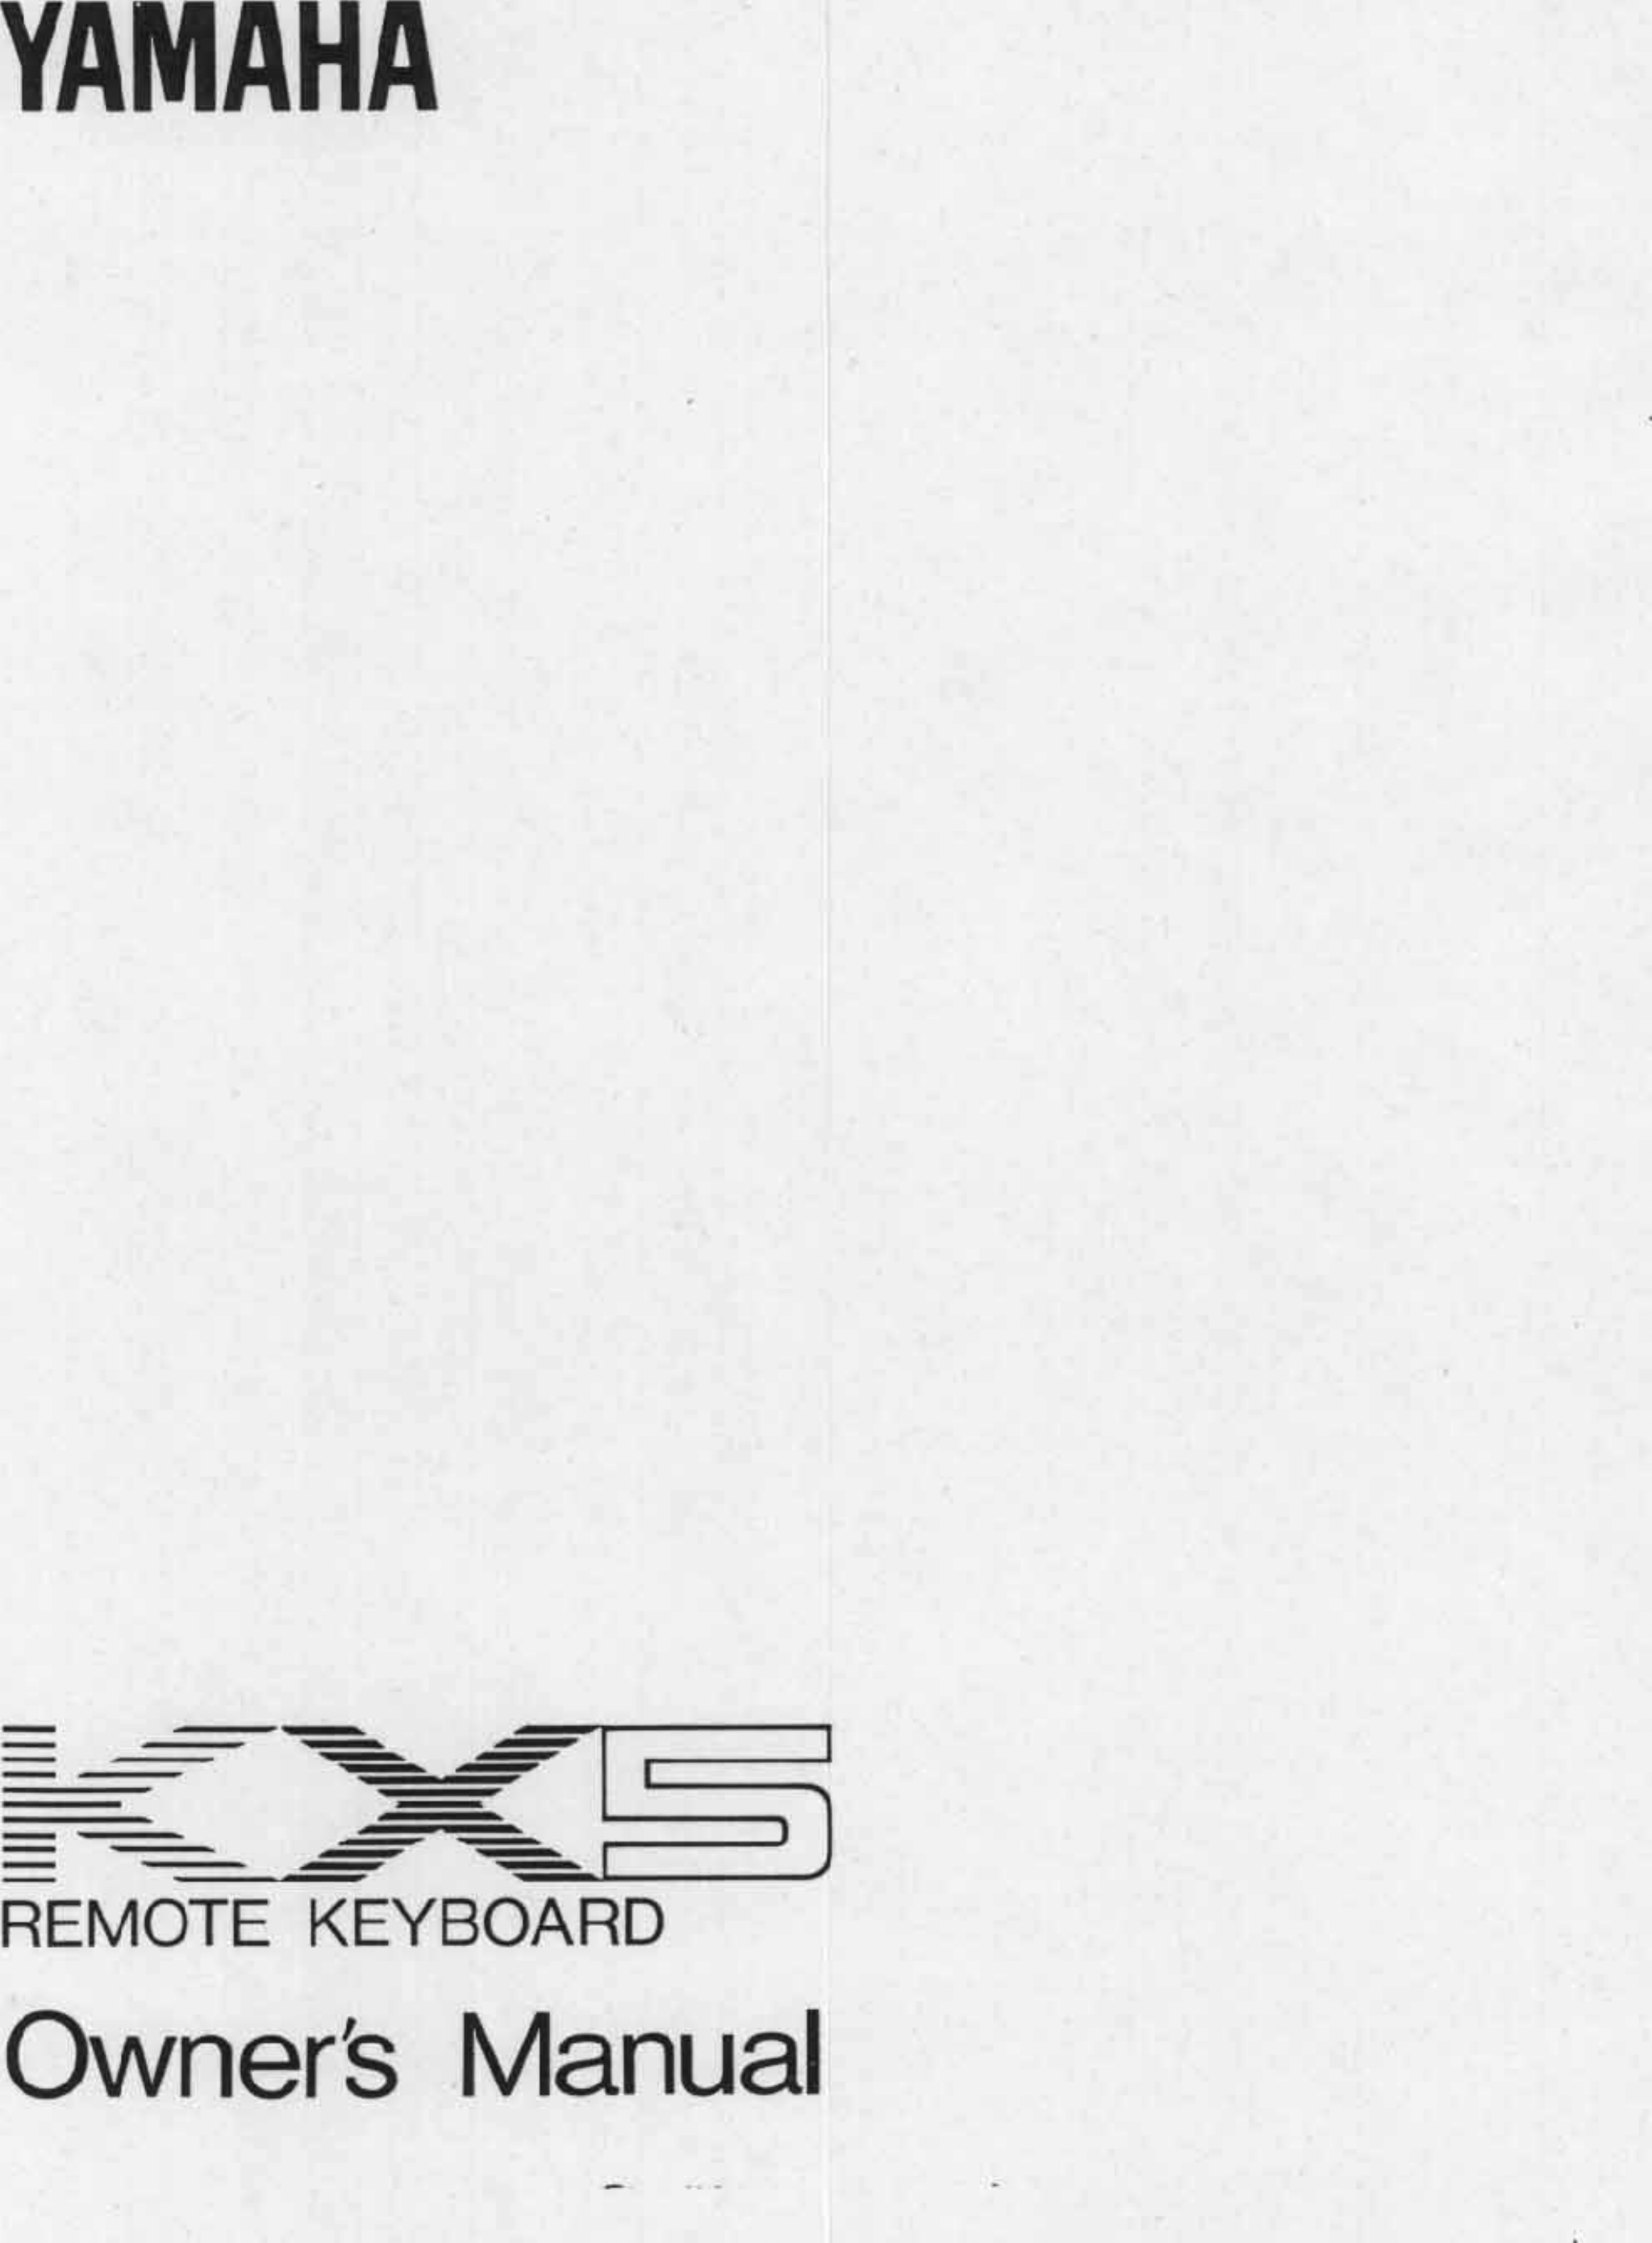 Page 1 of 8 - Yamaha  KX5 Owner's Manual (Image) KX5E